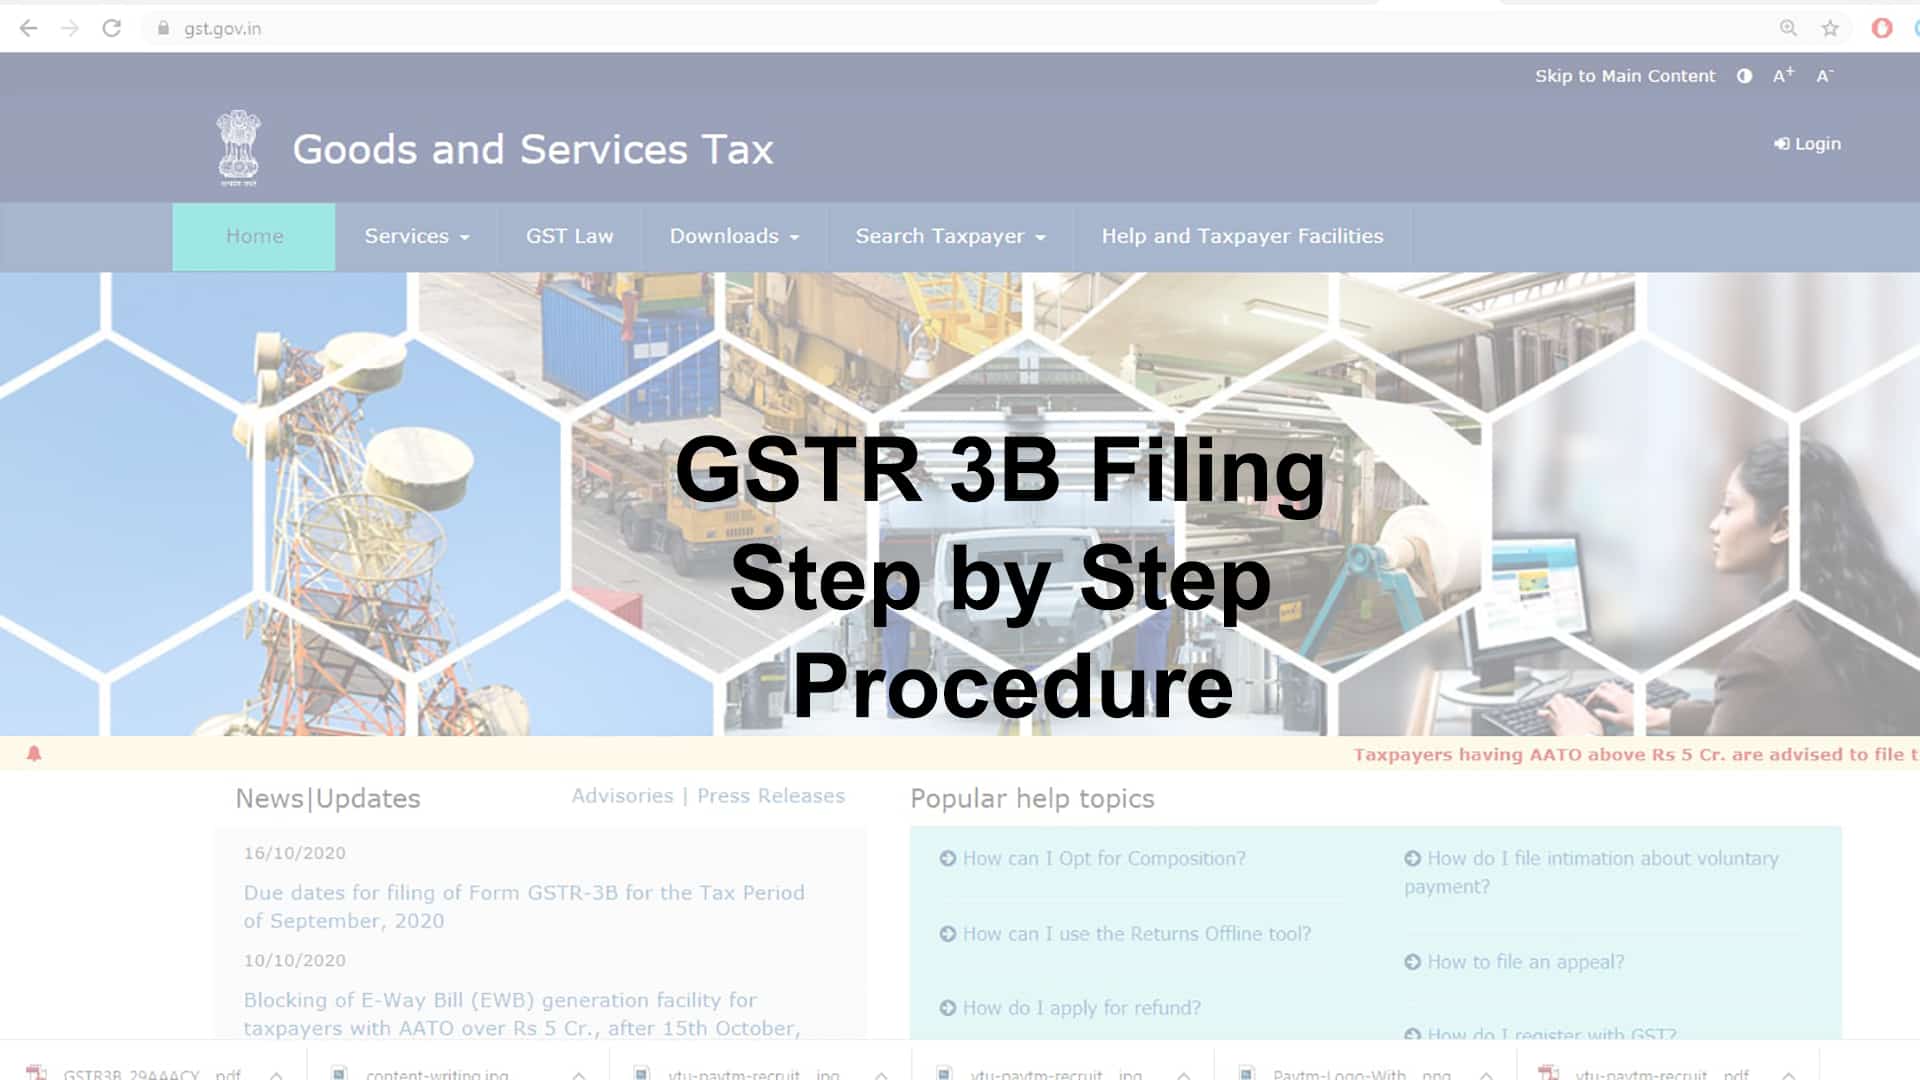 GSTR-3B Filing Step by Step Procedure